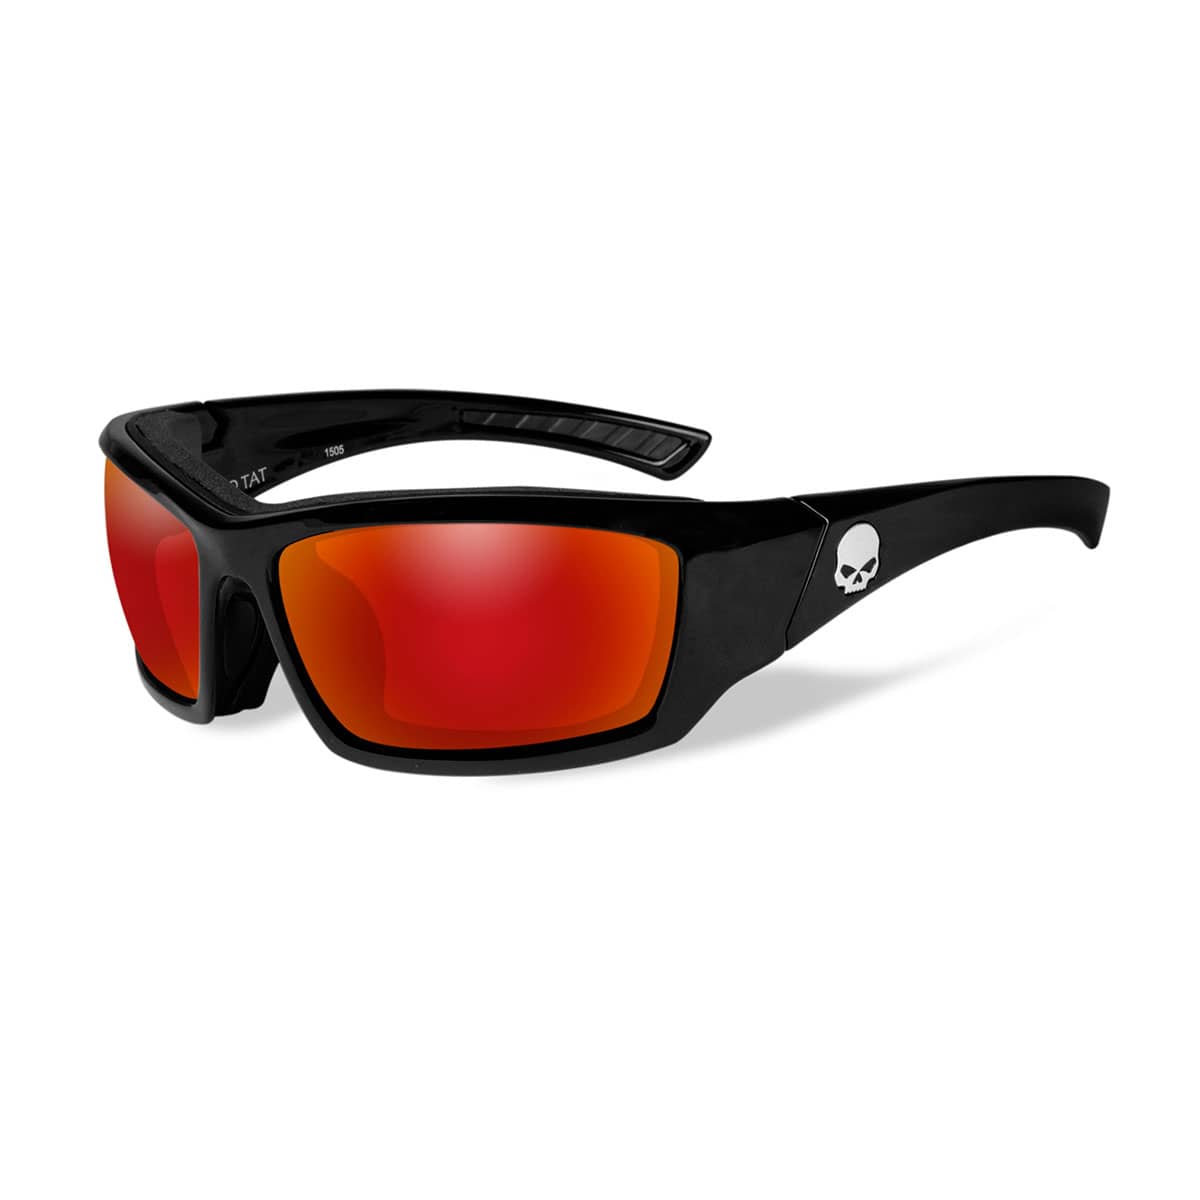 Harley-Davidson® Men's Tat Riding Sunglasses